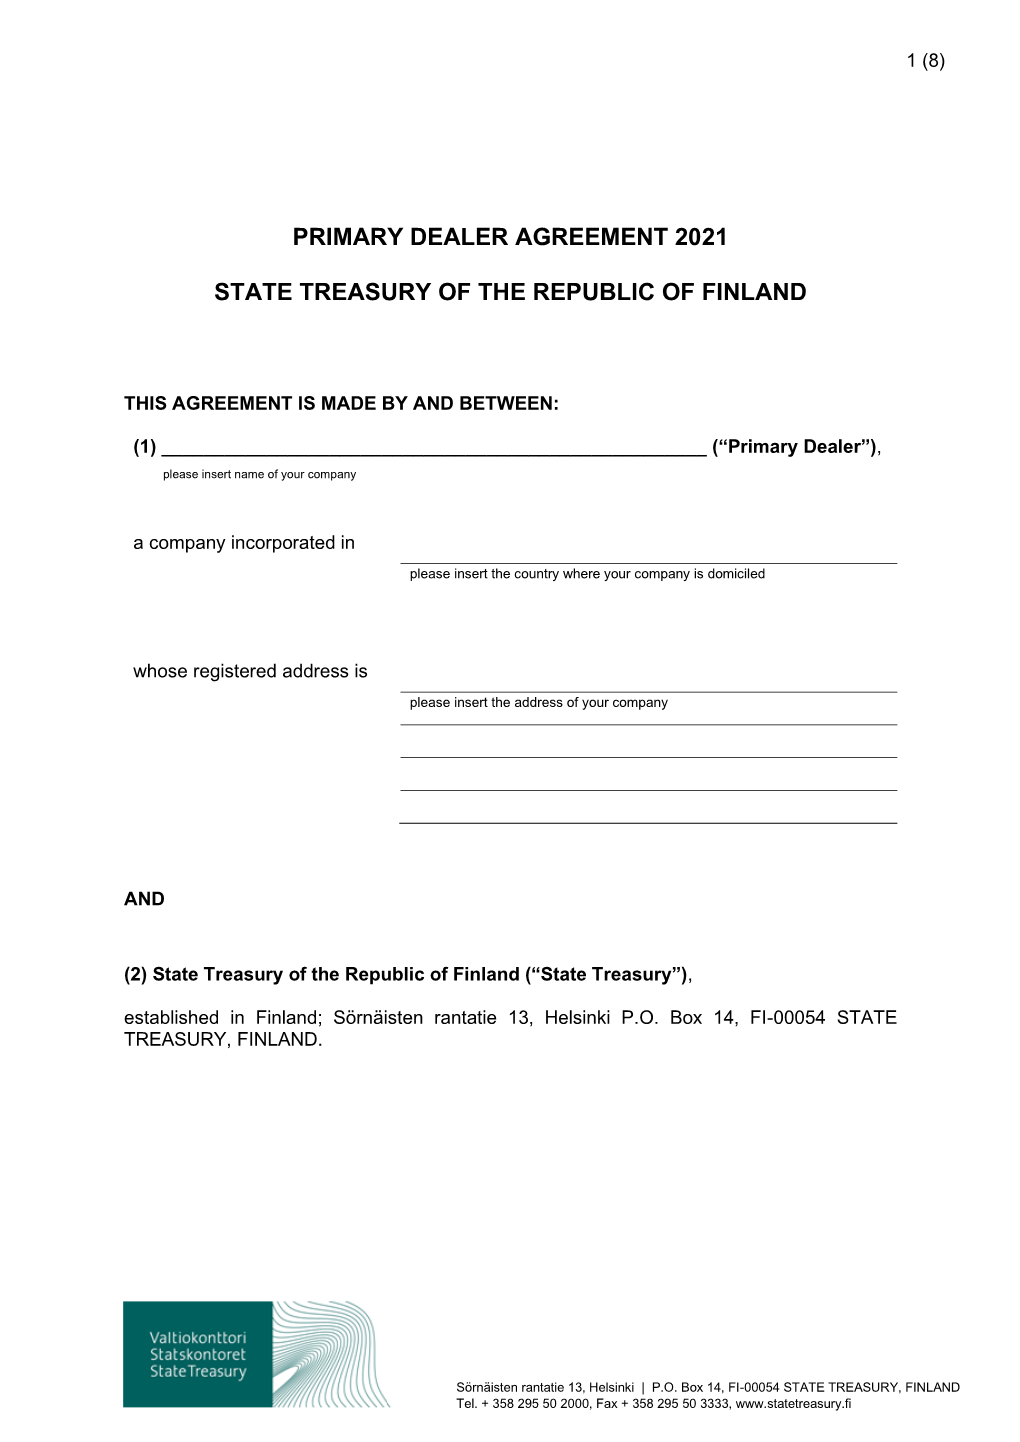 Primary Dealer Agreement 2021